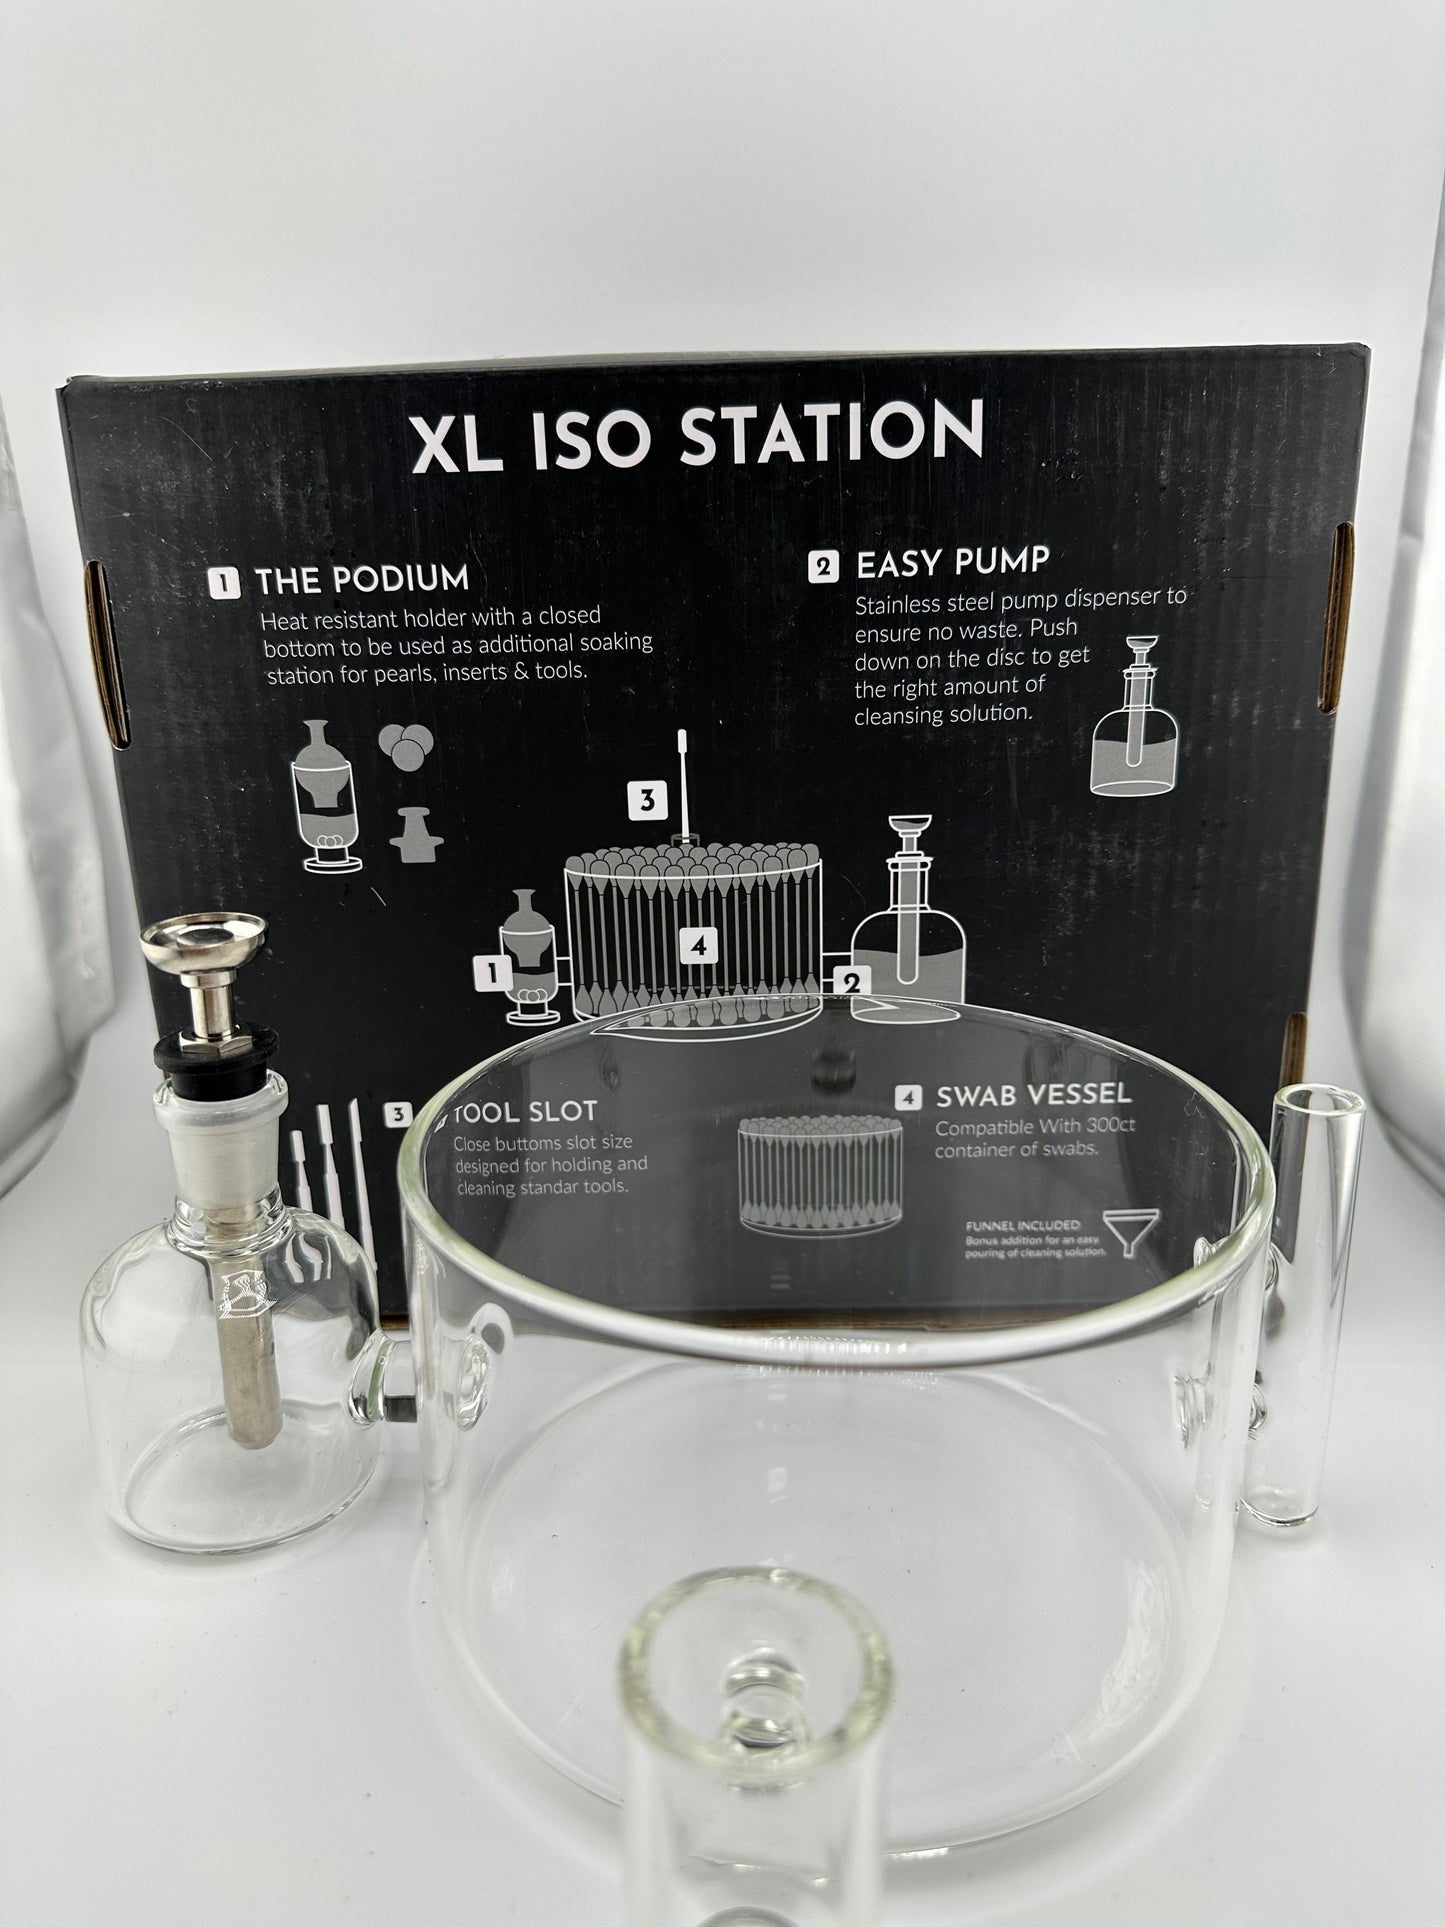 Apex Ancillary ISO station XL